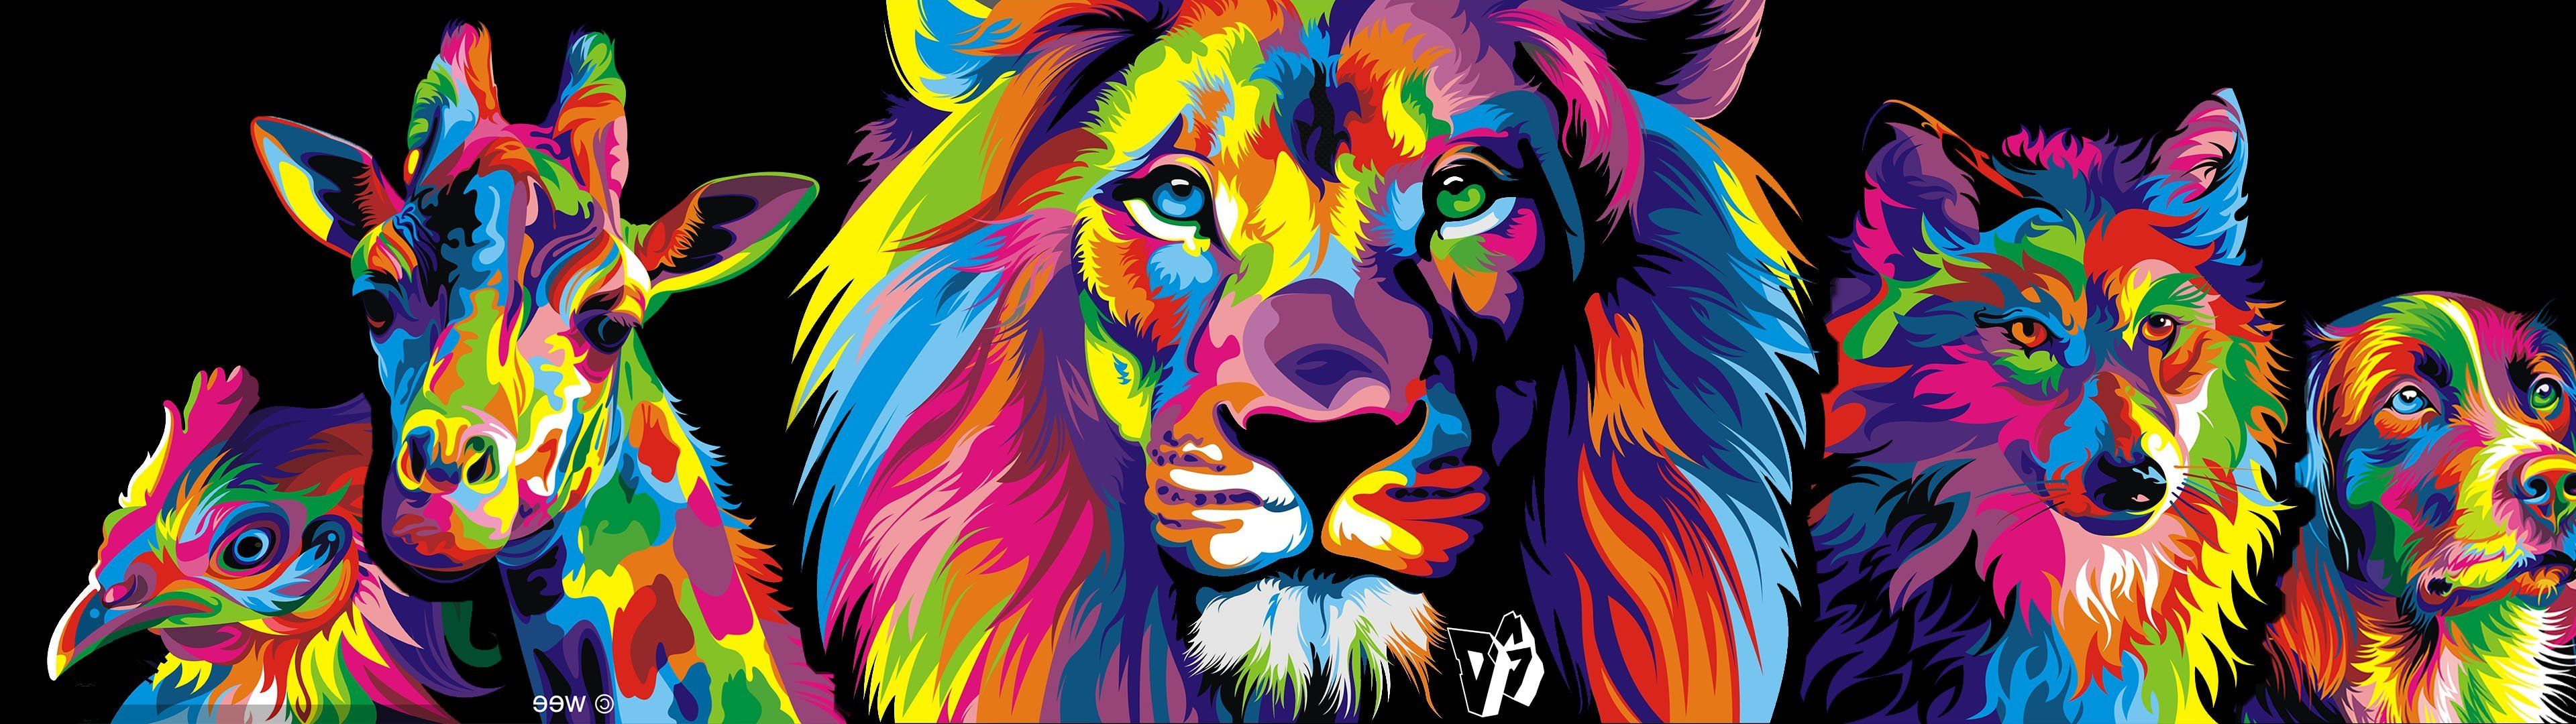 Cool Lion Wallpaper .wallpaperafari.com